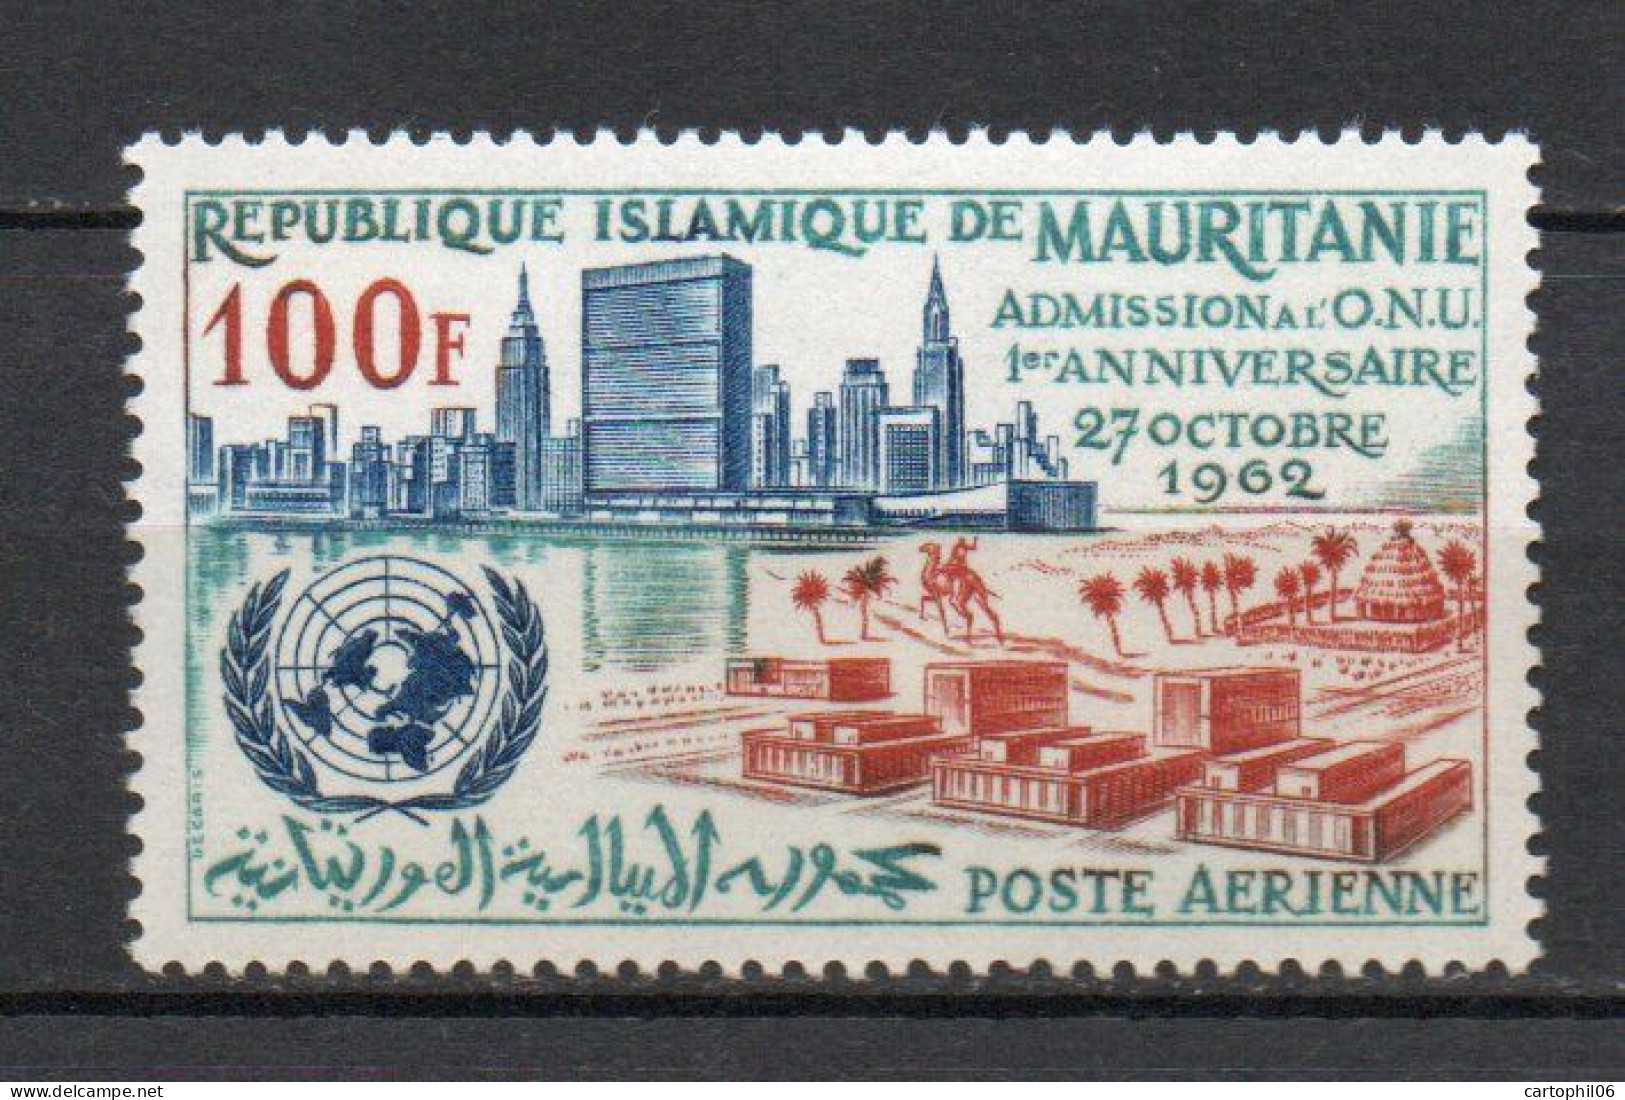 - MAURITANIE Poste Aérienne N° 22 Neuf ** MNH - 100 F. ADMISSION AUX NATIONS UNIES 1962 - Cote 16,00 € - - Mauritanie (1960-...)